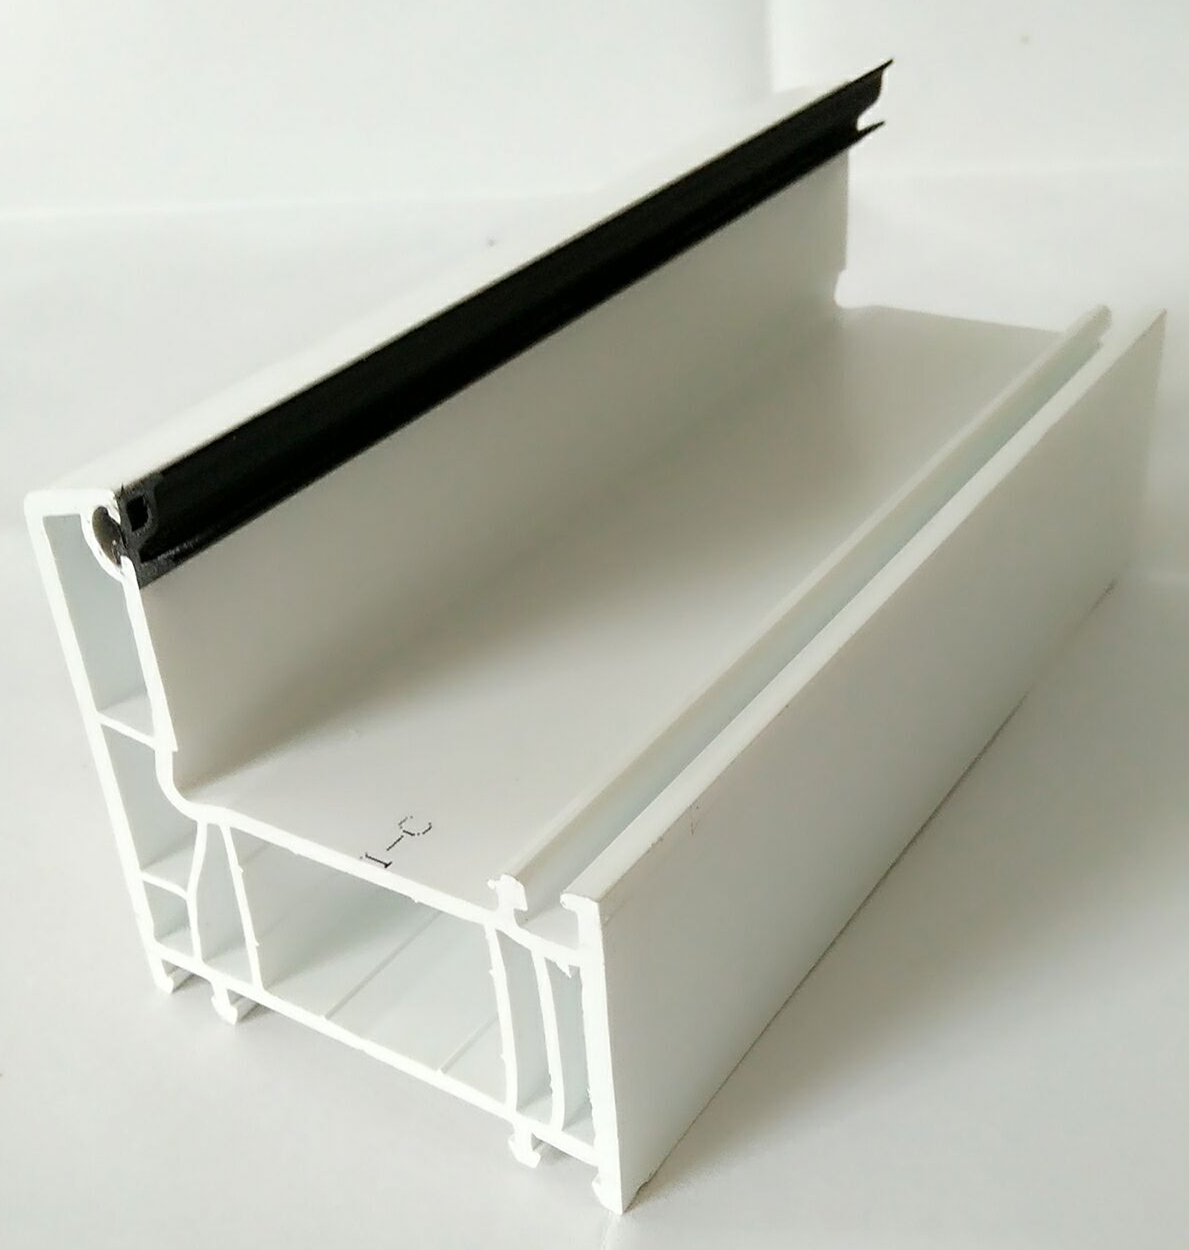 65mm series vinyl extrusion profiles for Plastic windows and doors